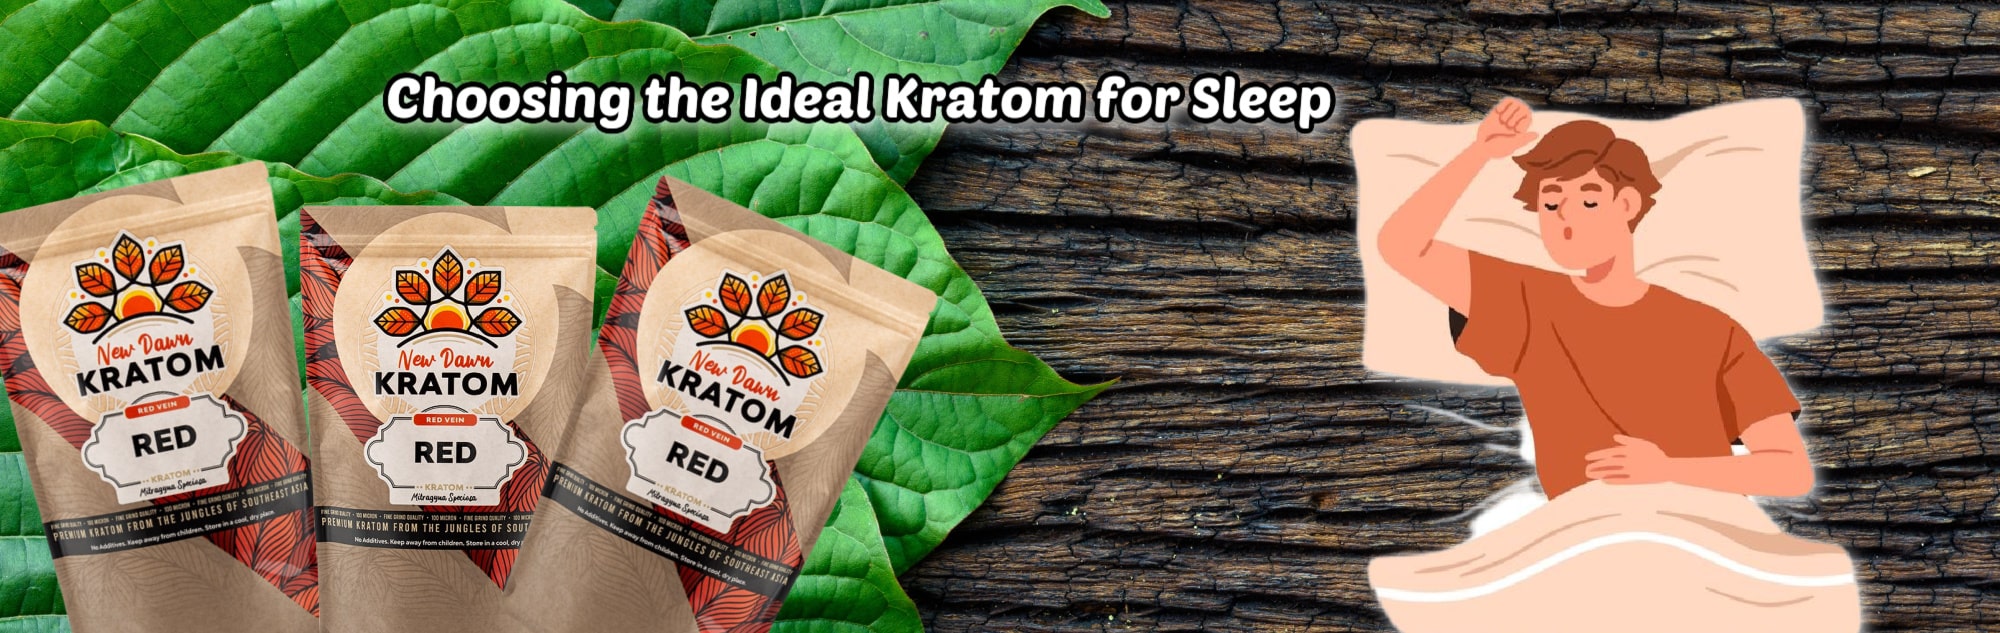 image of choosing the ideal kratom for sleep